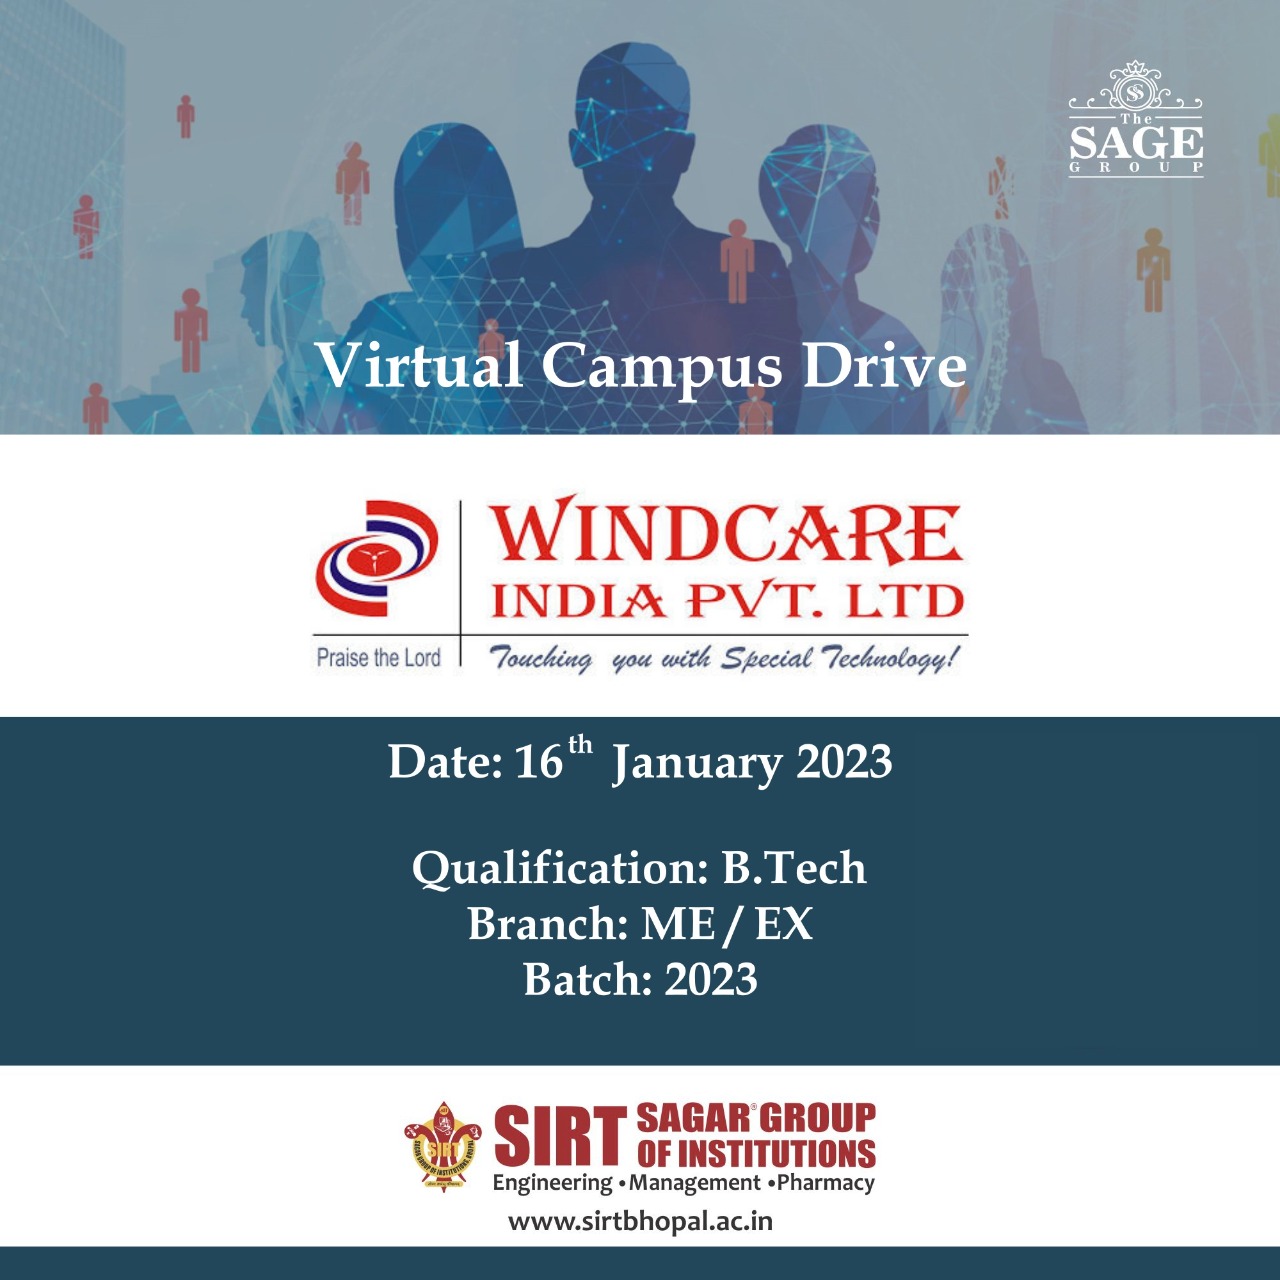 WINDCARE INDIAN PVT LTD, B.TECH/ME/EX, 2023, 2023-01-16